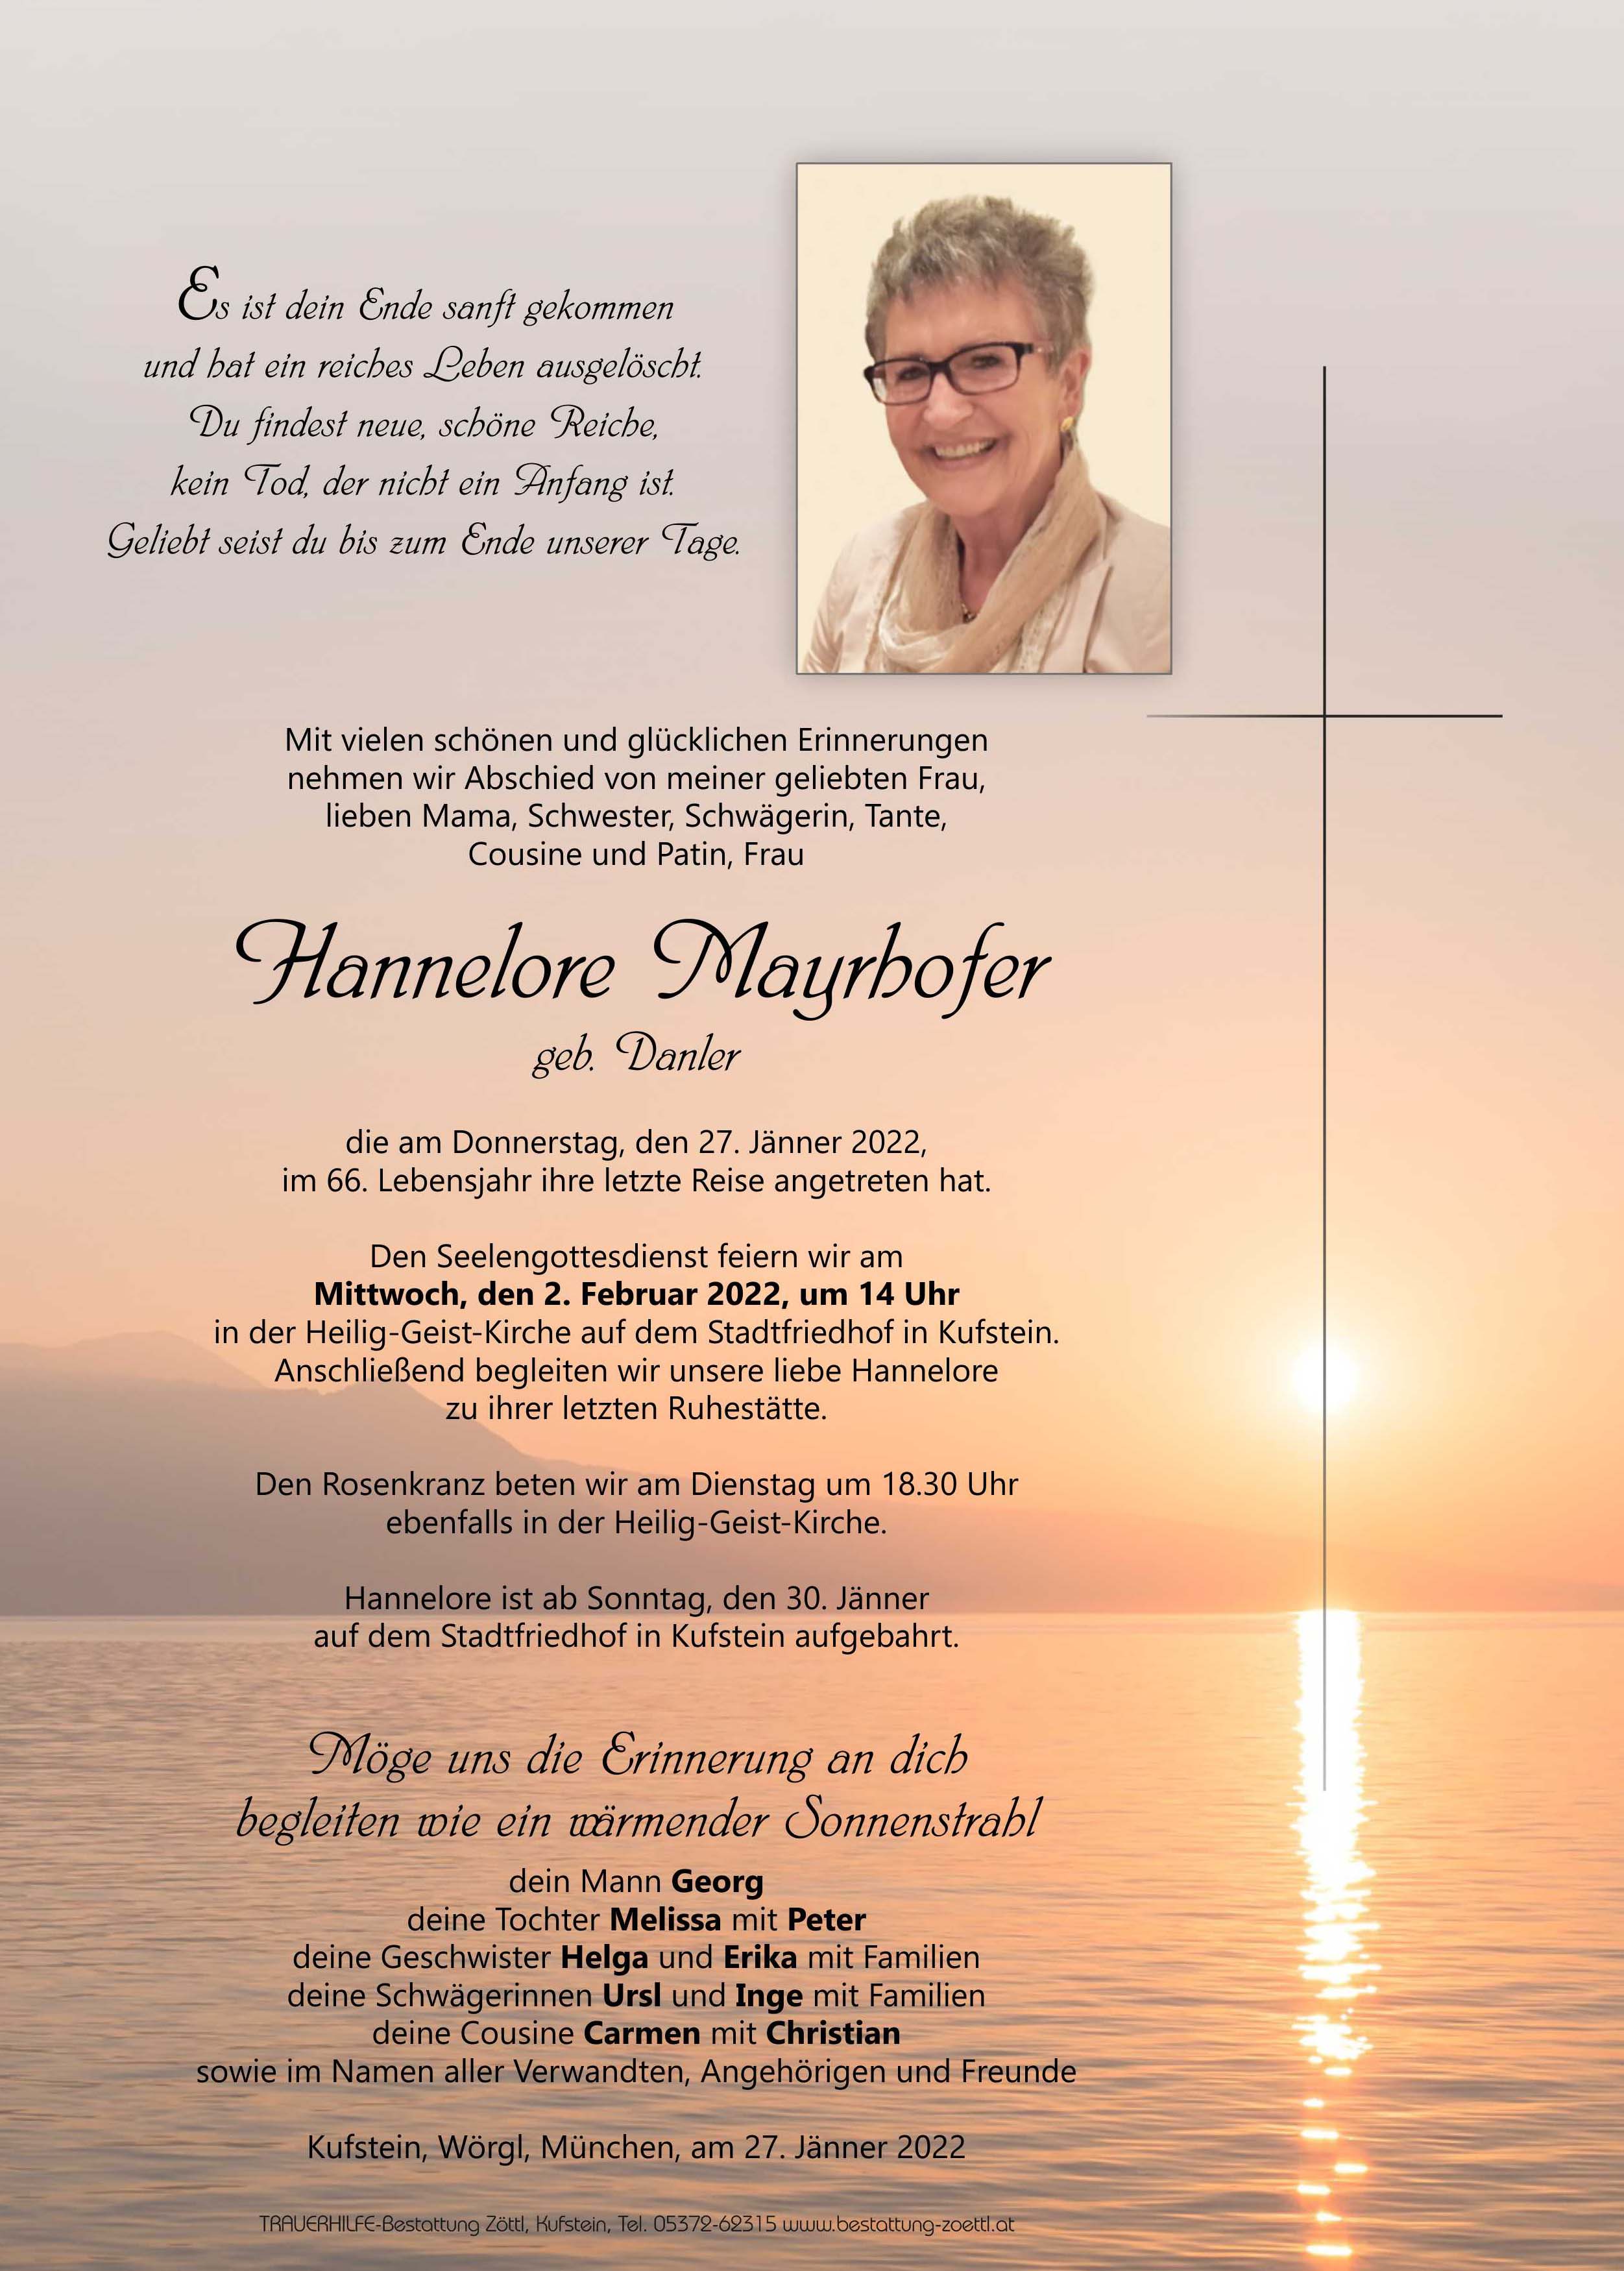 Hannelore Mayrhofer